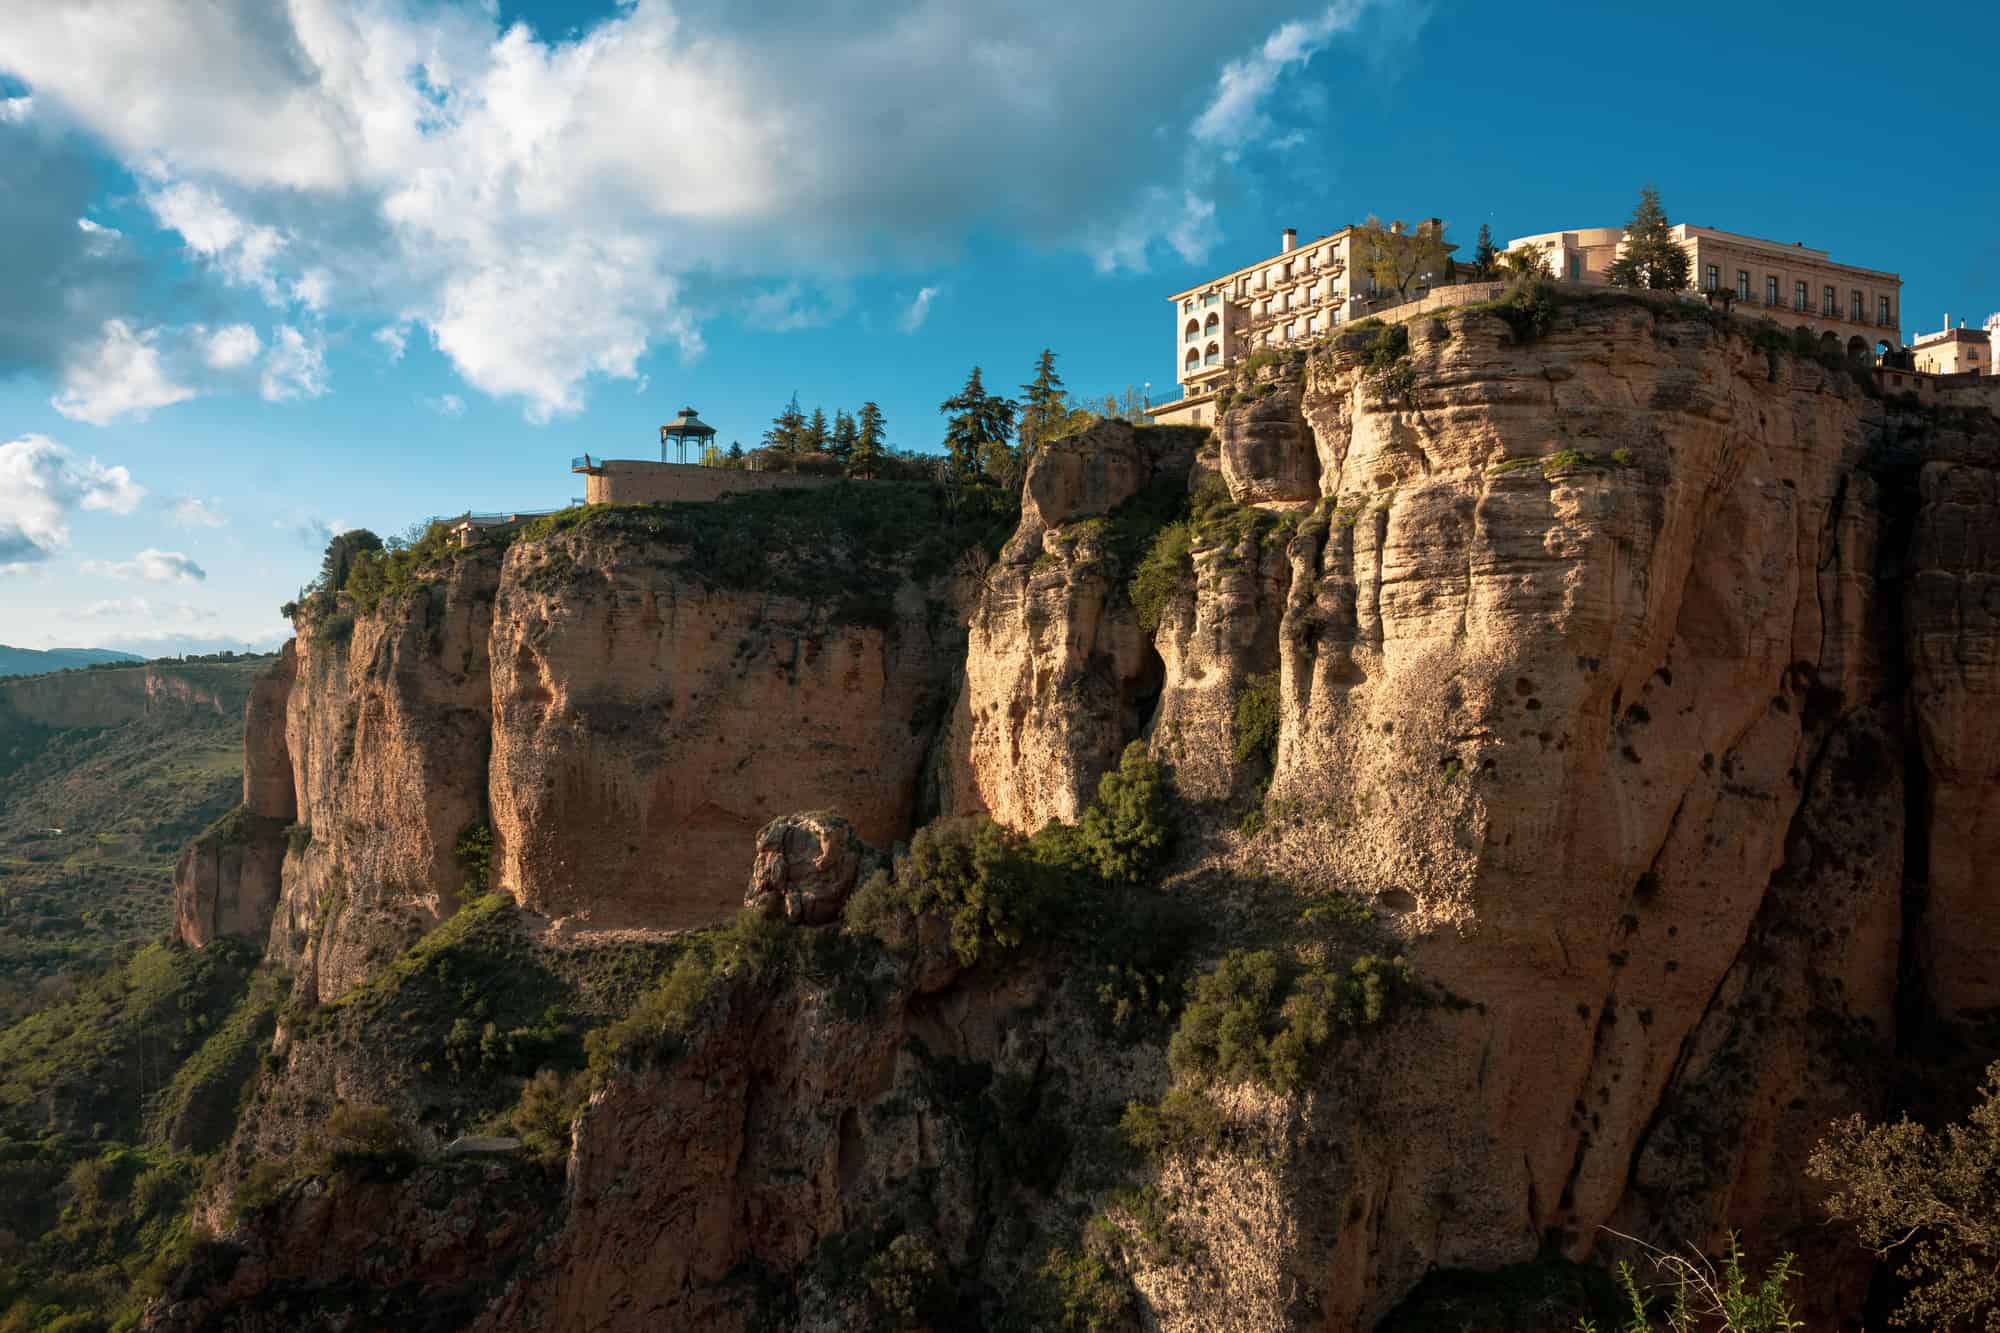 Buildings on huge cliffs in Ronda, Spain in March